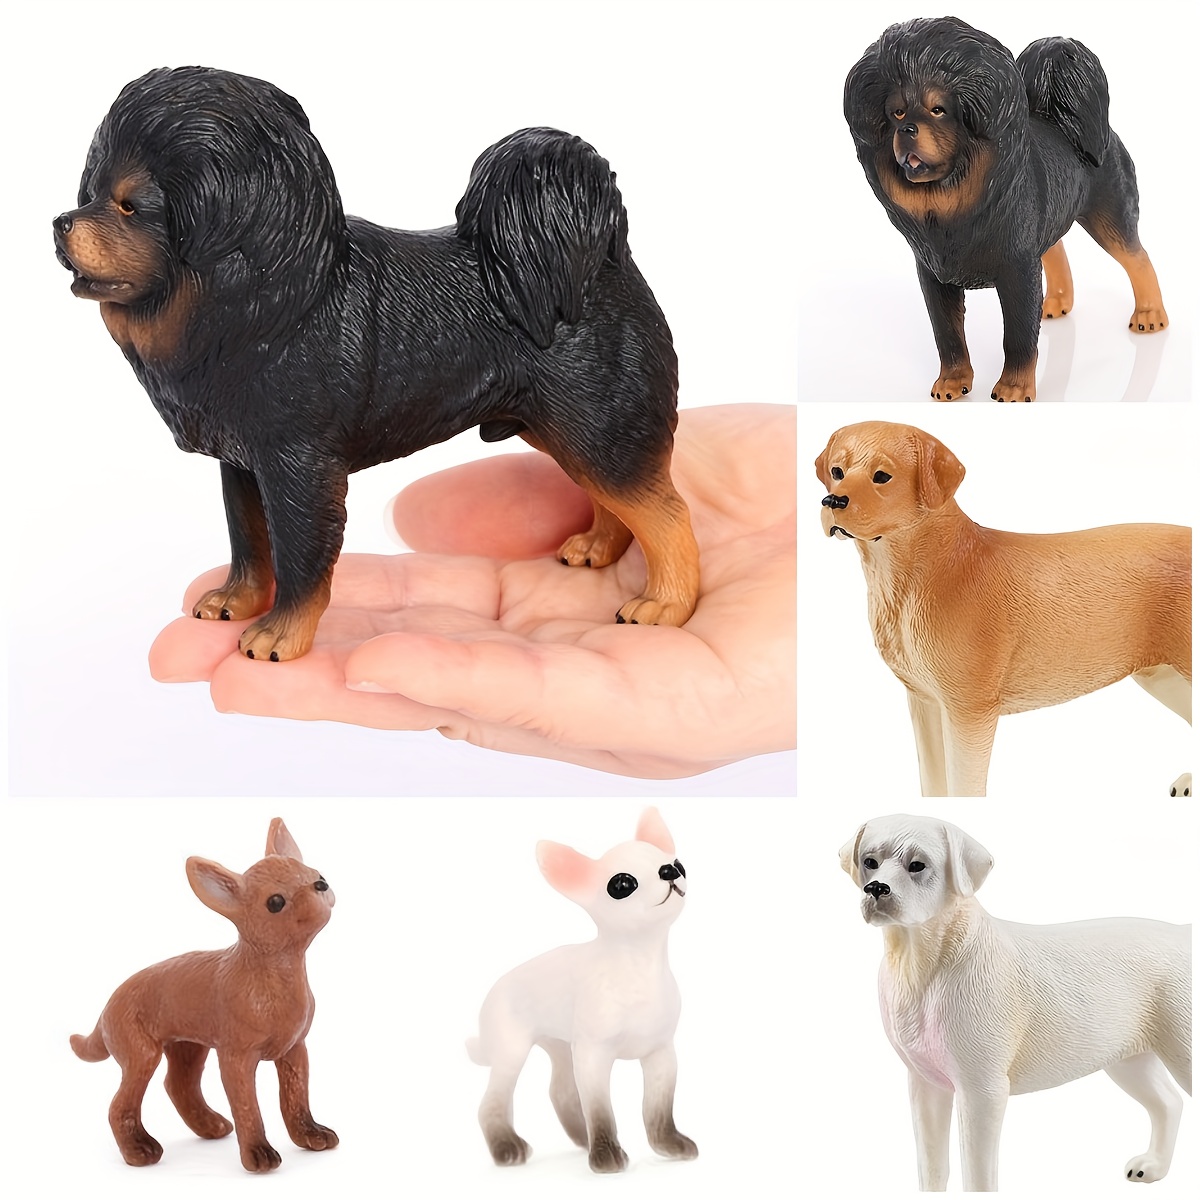 Chihuahua Statue Simulation Dog Model Figurines Animal Art